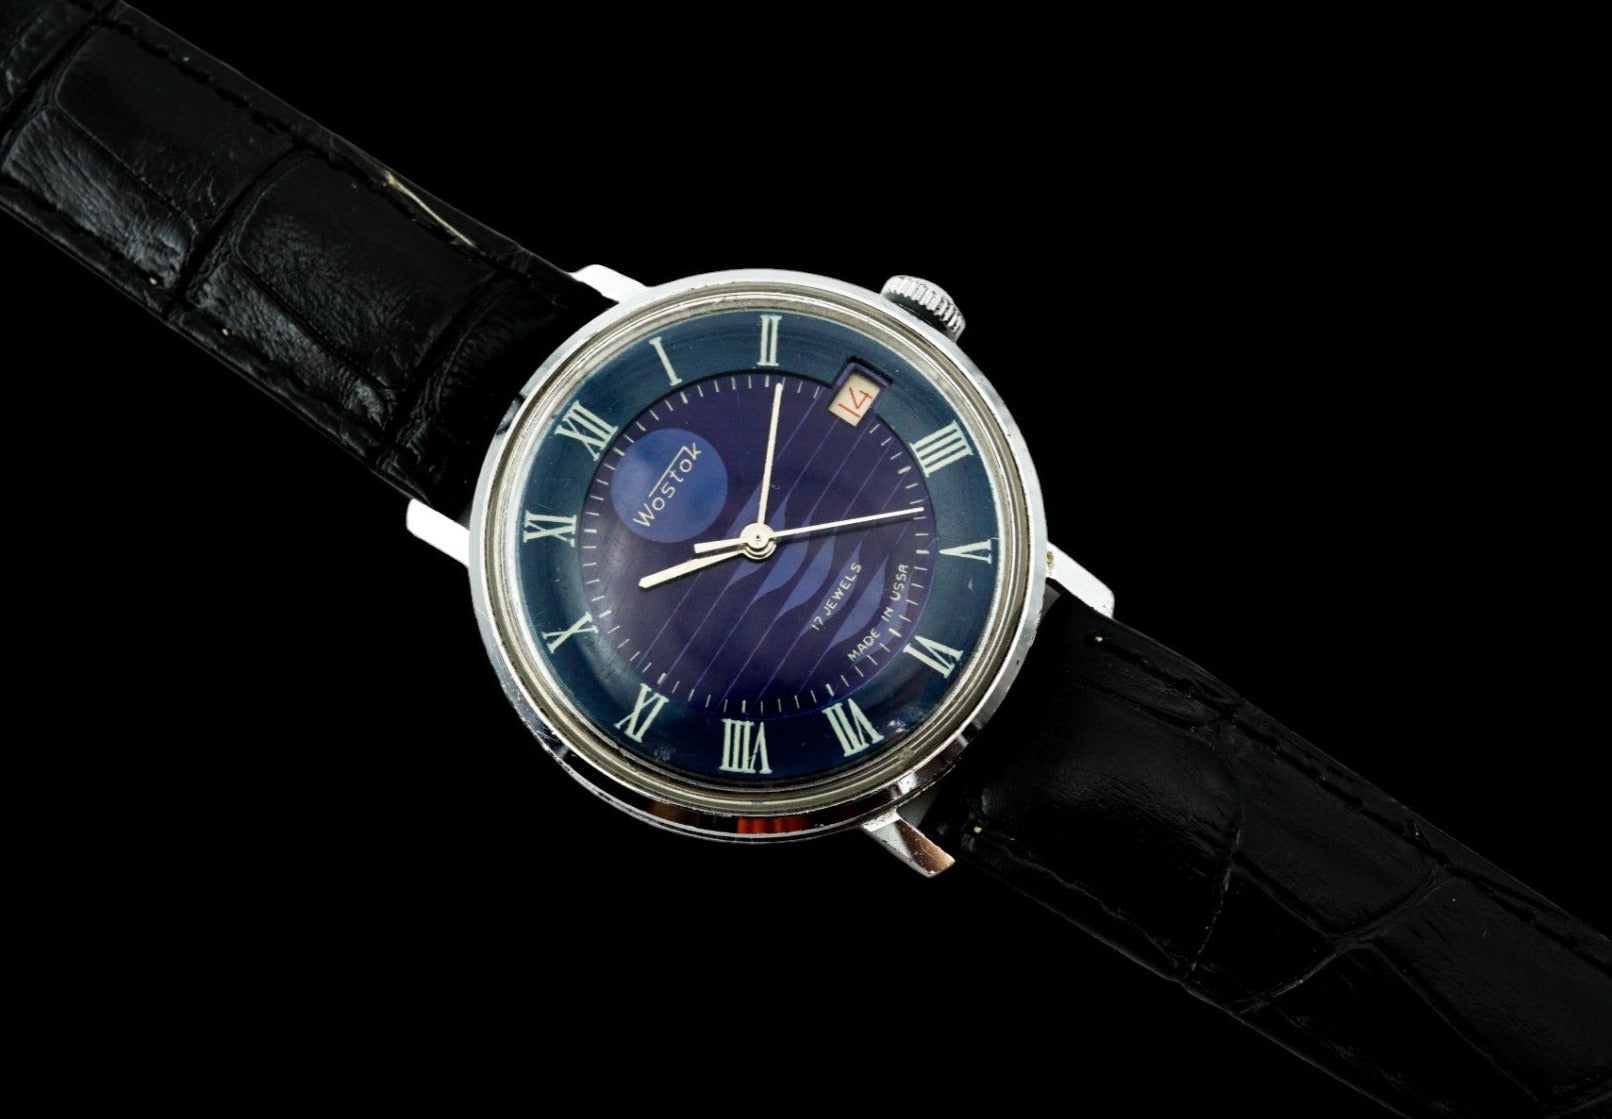 VOSTOK ビンテージ ネプチューン 青文字盤 ダークブルー 機械式腕時計 ボストーク Neptune